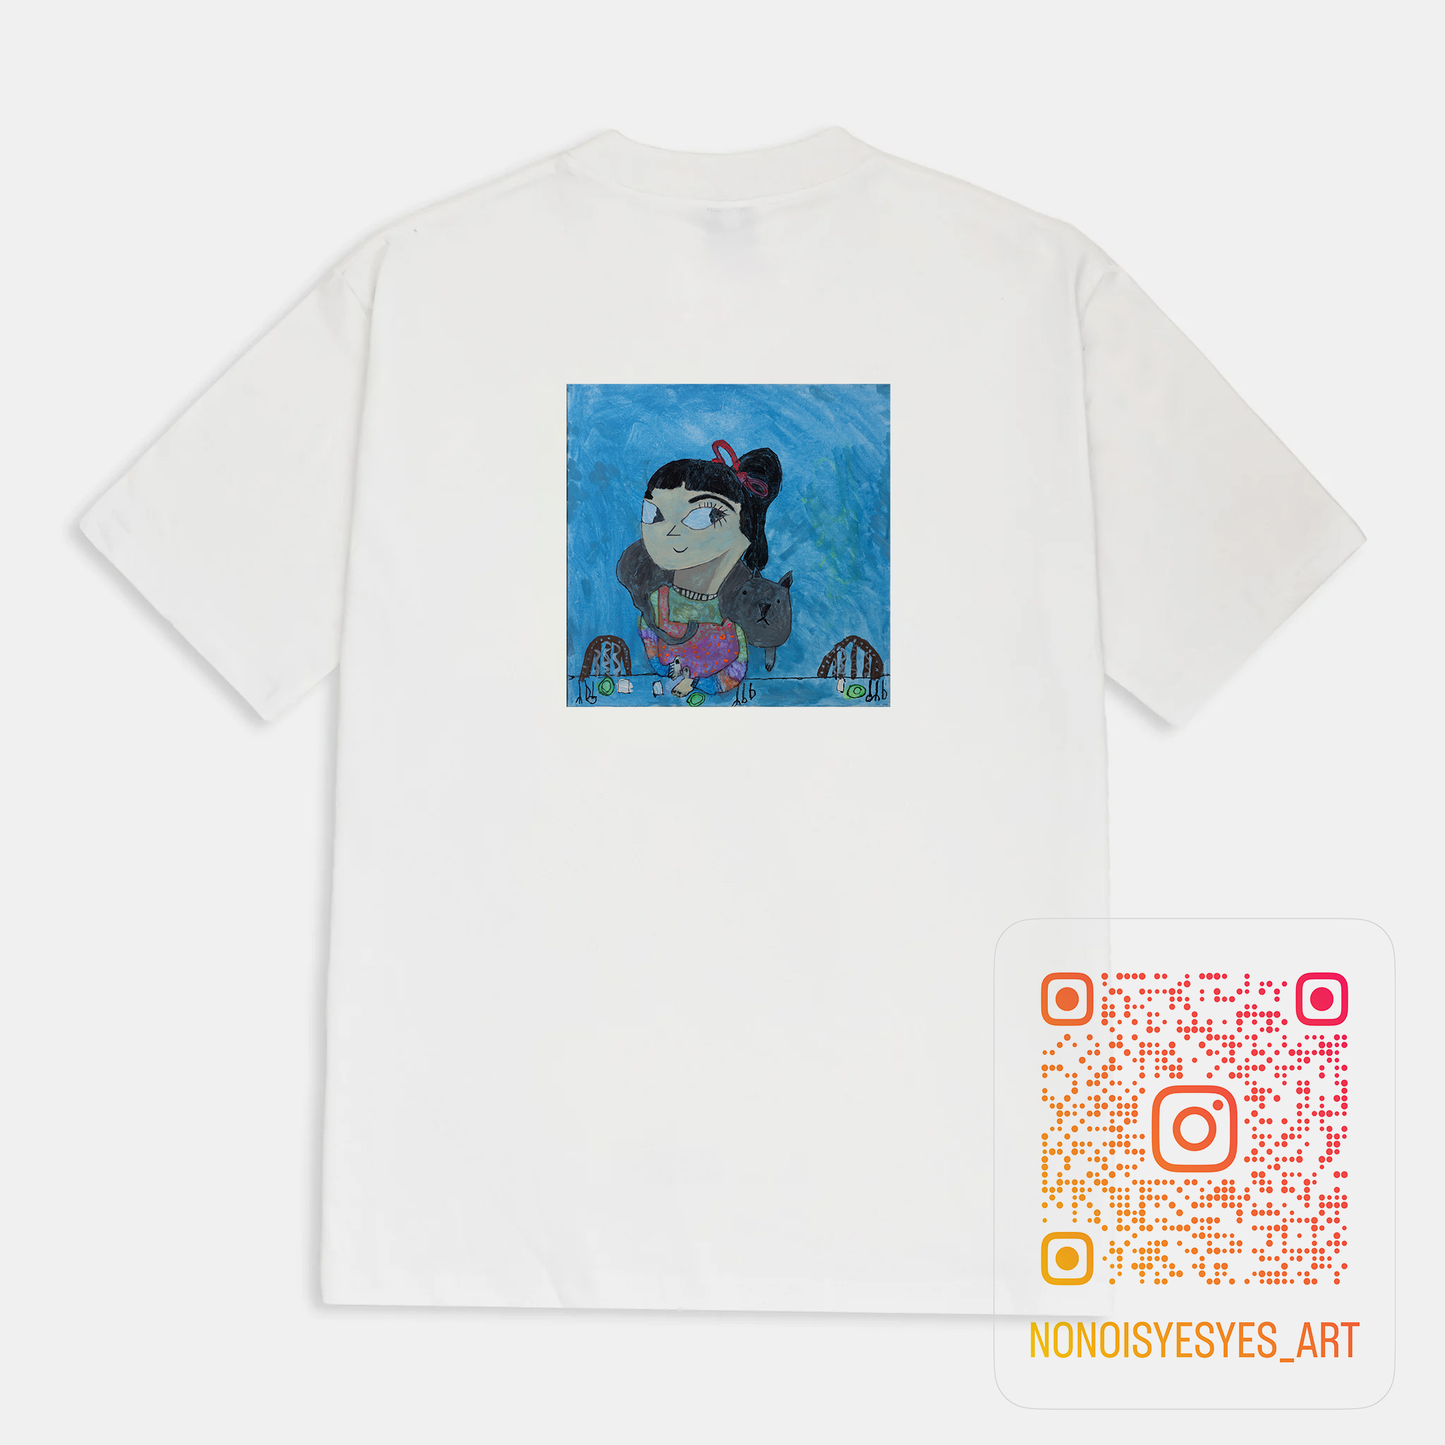 [NO T-shirt] Audrey Hepburn Portrait T-Shirt Digital Printing on 100%Cotton High Quality T-Shirt